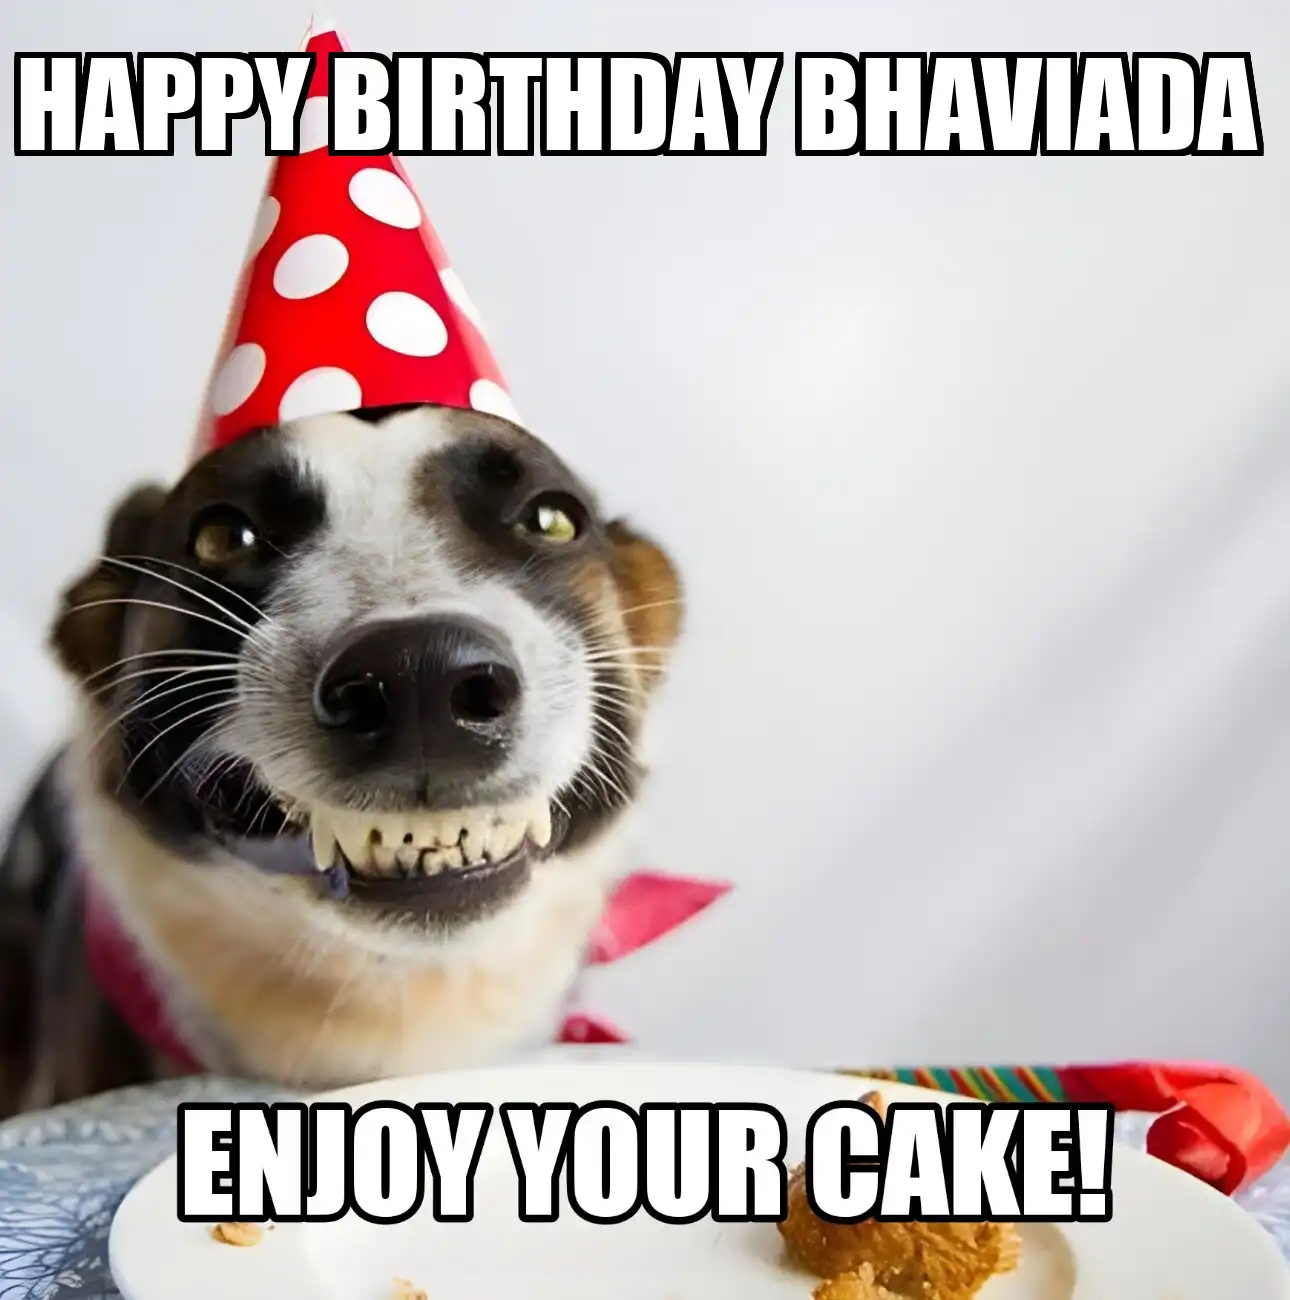 Happy Birthday Bhaviada Enjoy Your Cake Dog Meme